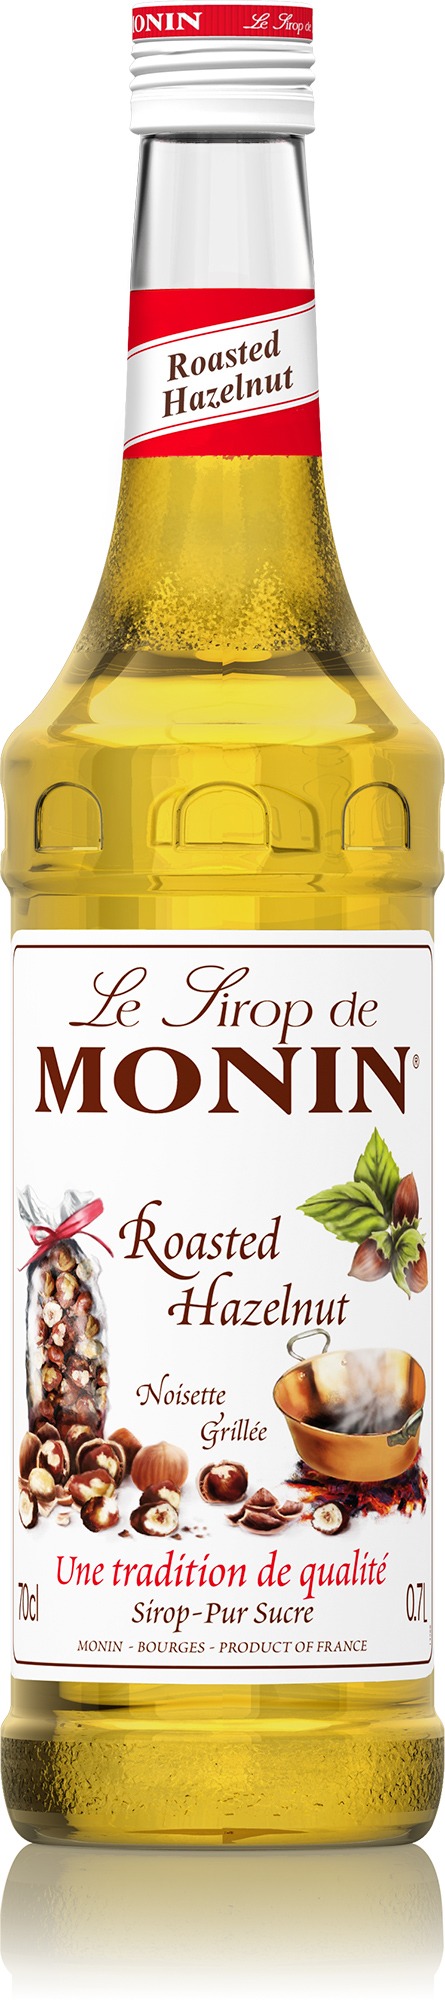 Monin Sirop de Noisette Grillée, 700 ml - Crema